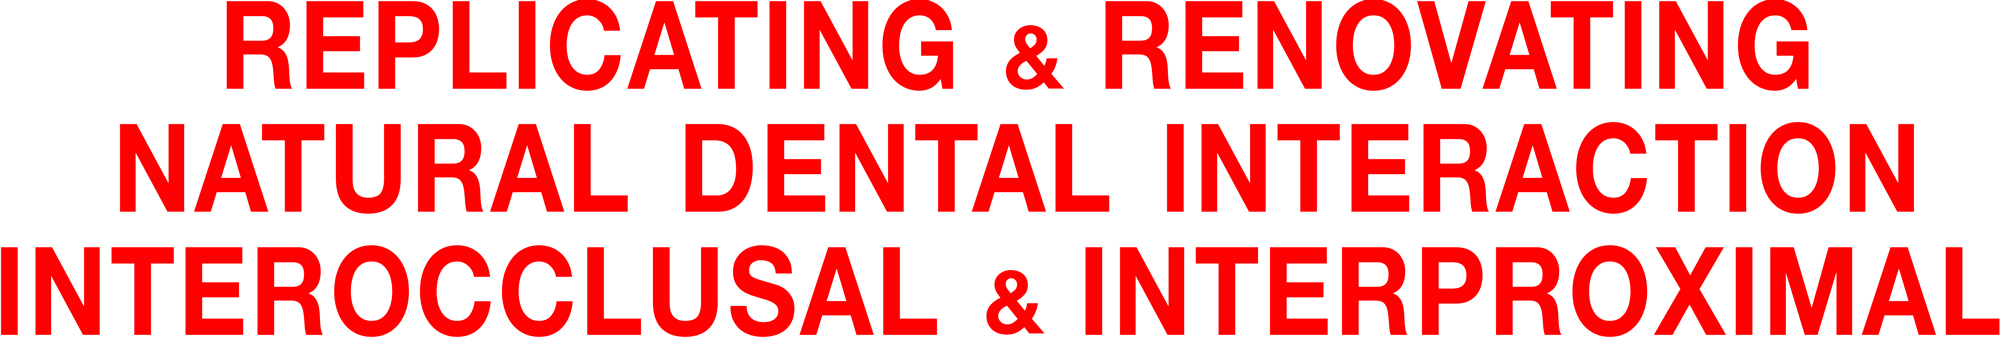 Replicating--Renovating-Natural-Dental-Interaction-Interocclusal--Interproximal by Ron Winter of Fabulous Teeth @ Seaside Dental Laboratory & Clinic.jpg